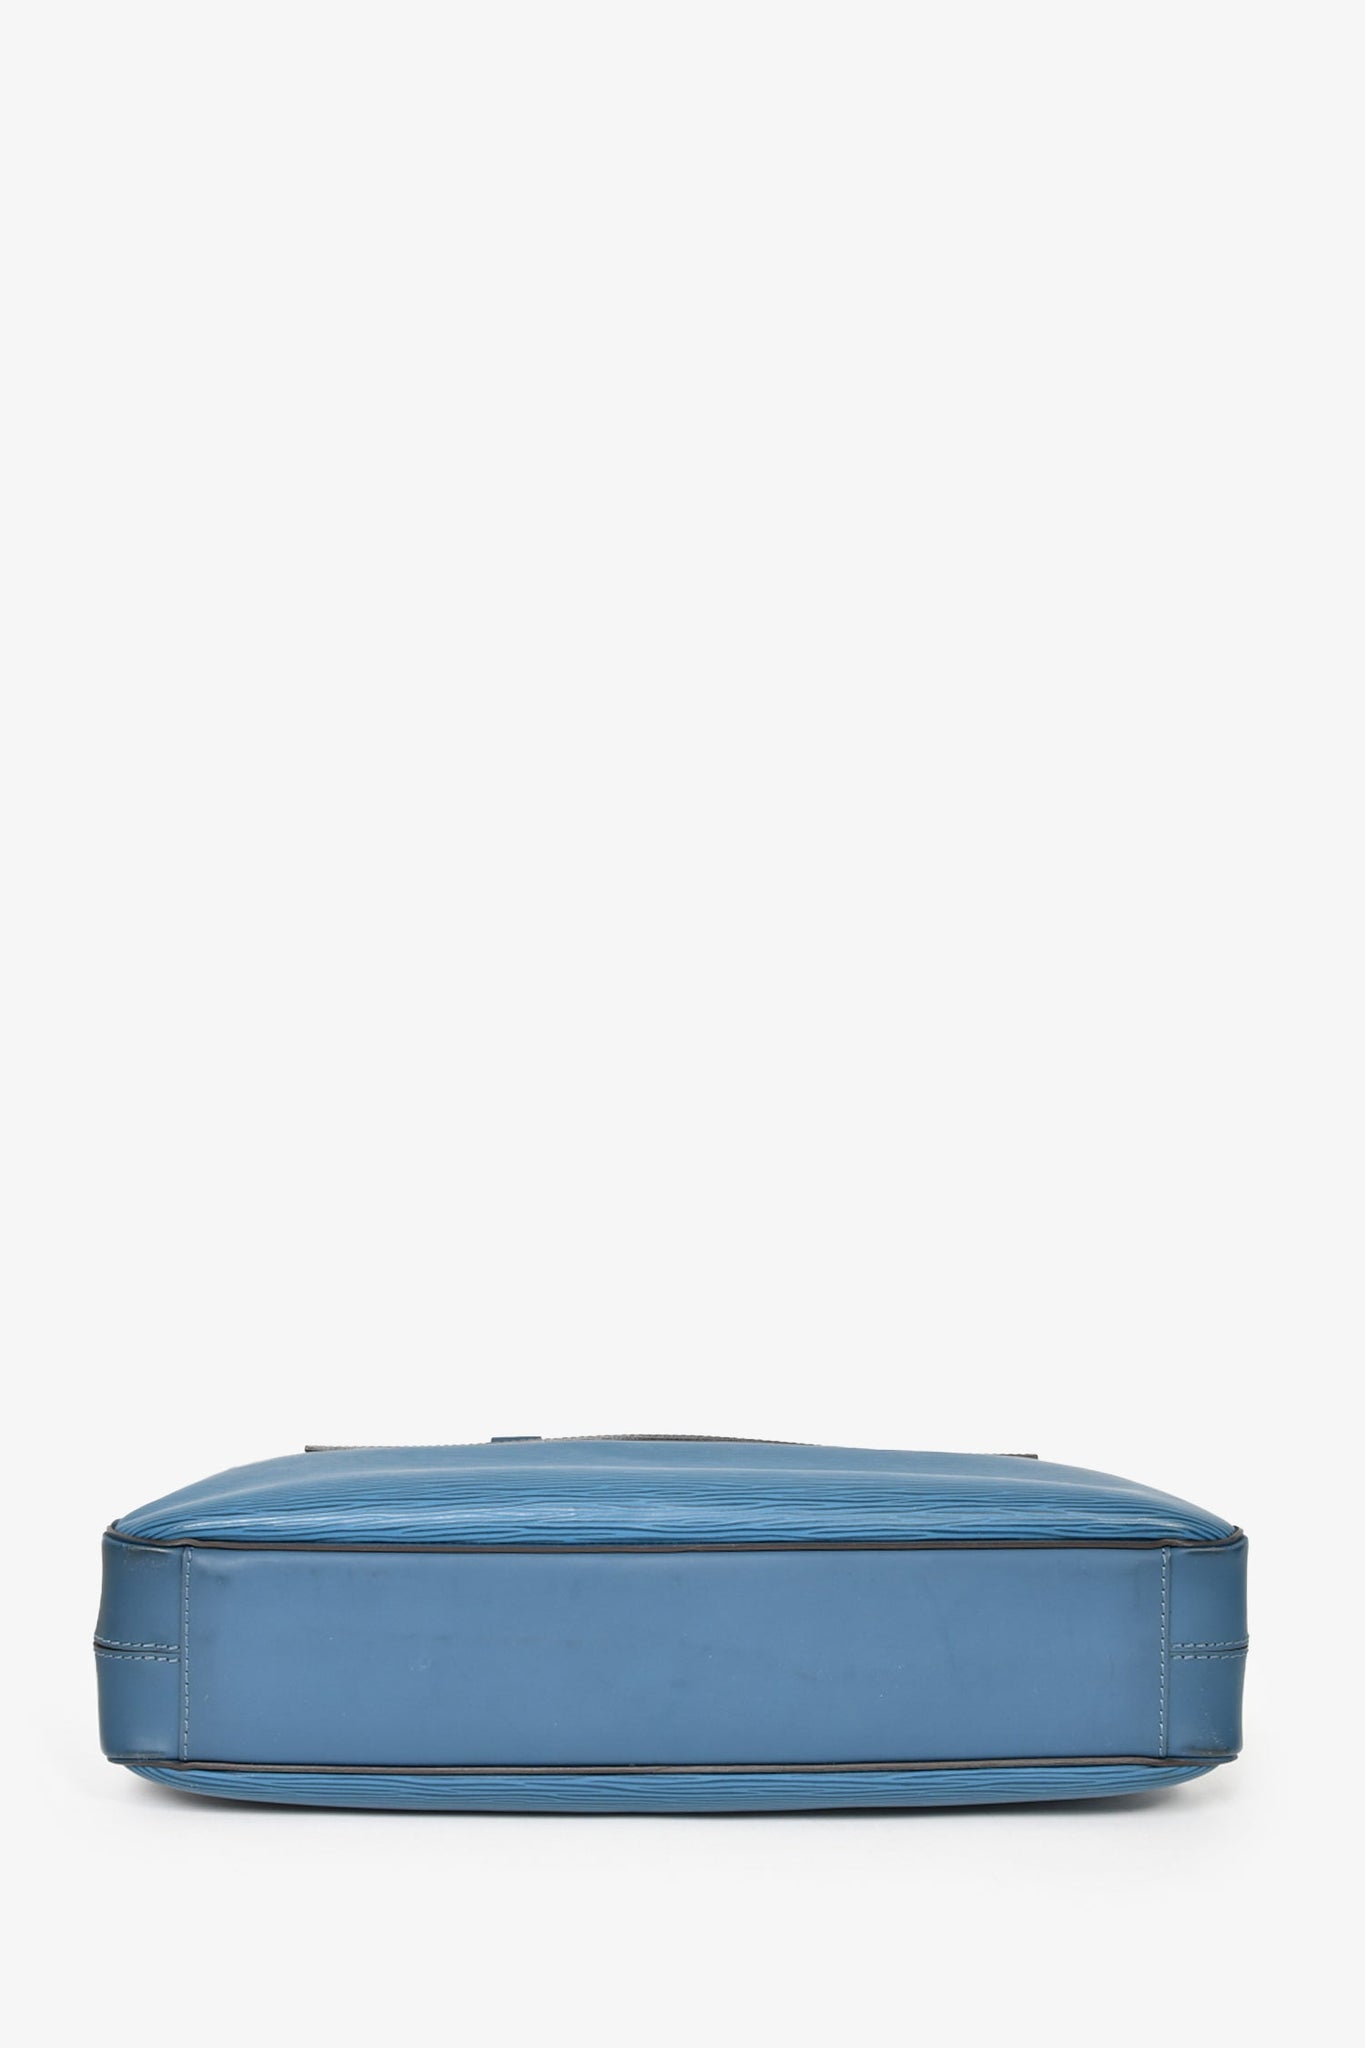 Louis Vuitton Blue Epi Leather 'Porte Documents' Briefcase with Strap